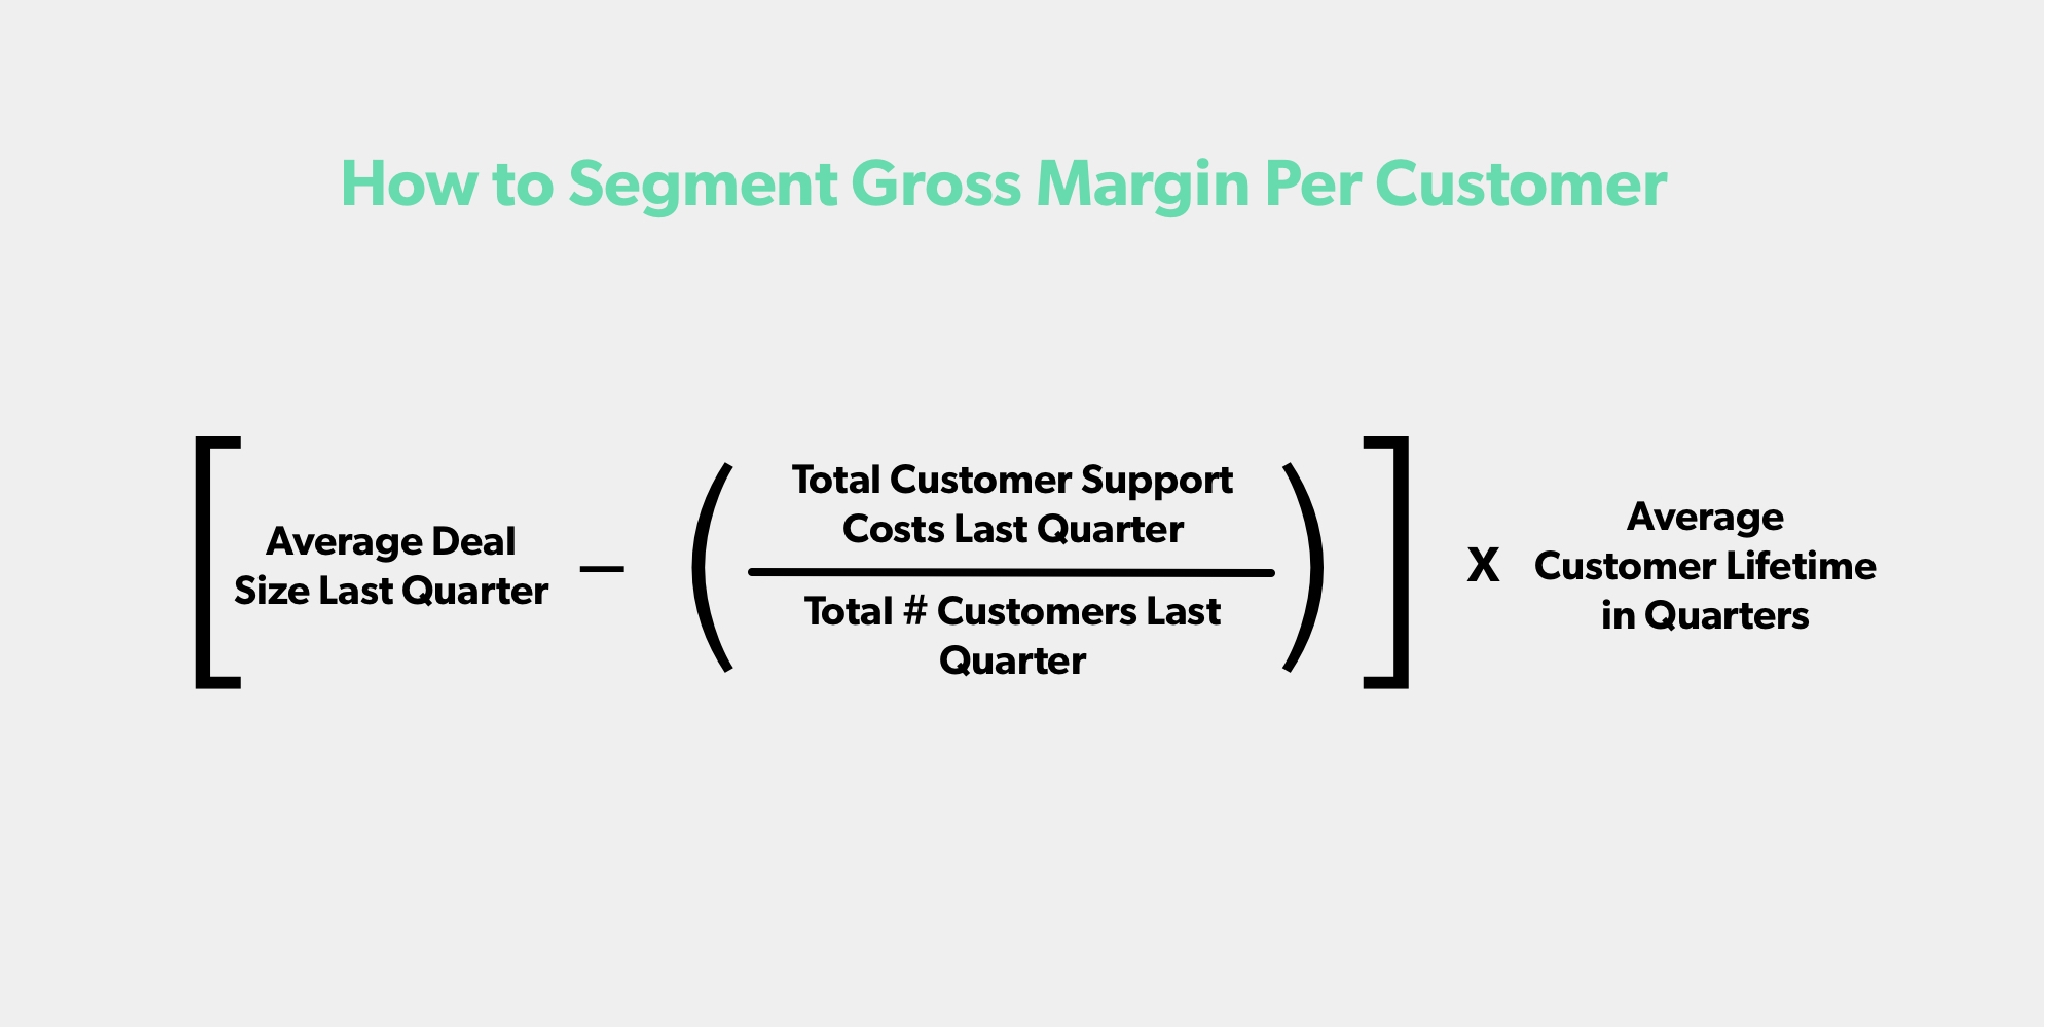 Segmenting gross margin by customer